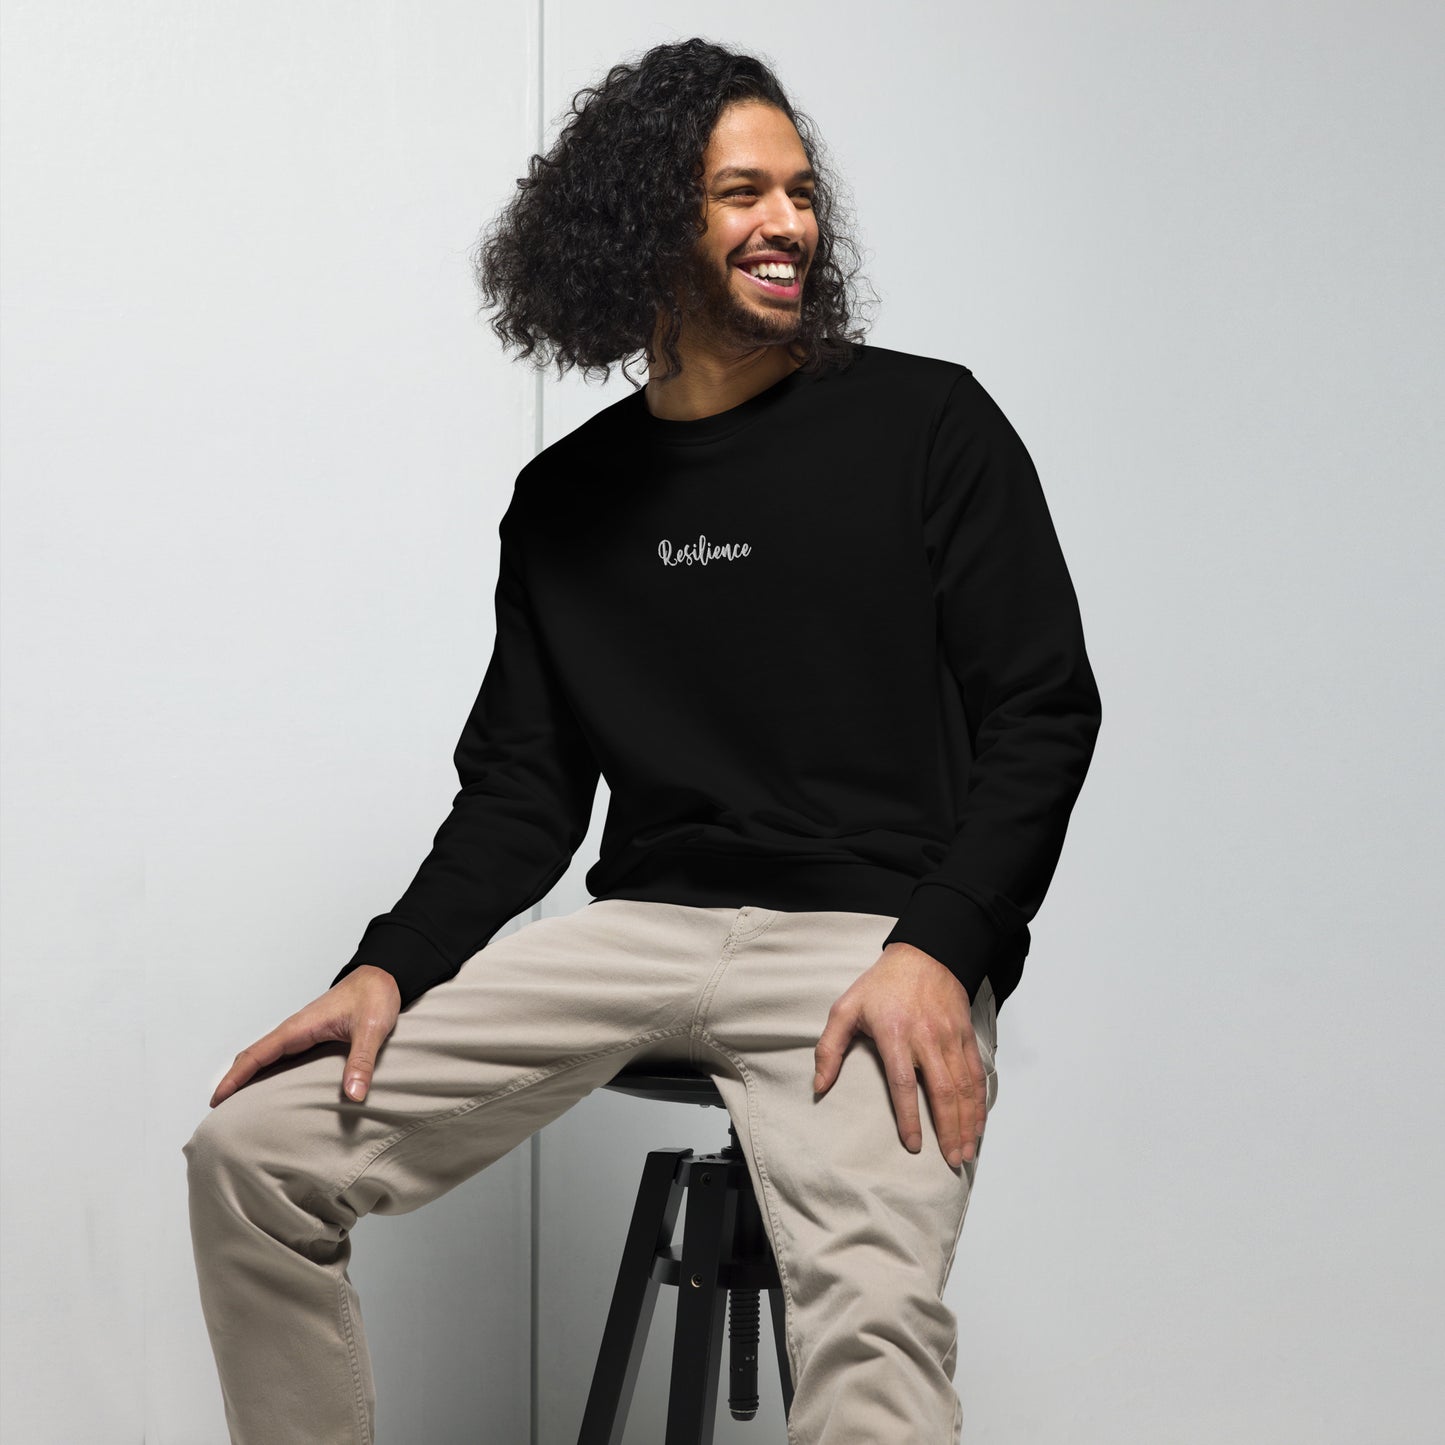 Resilience Men's Organic Cotton Sweatshirt